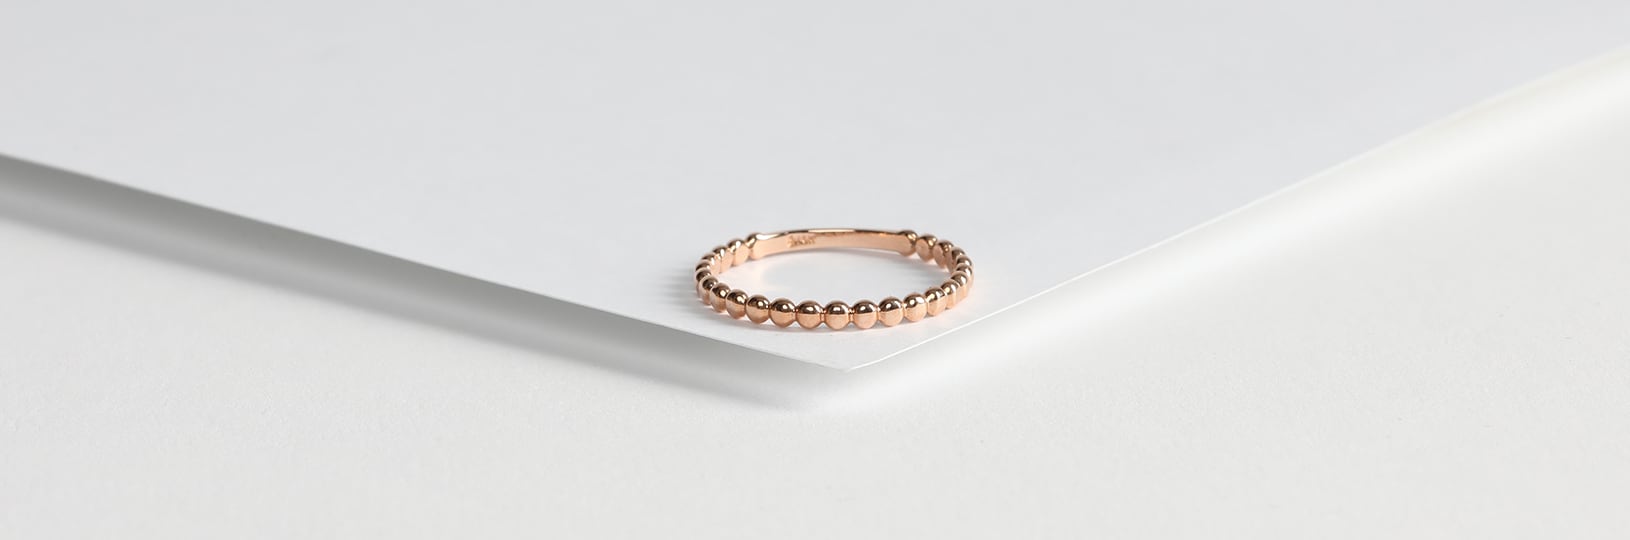 Simple rose gold wedding ring.